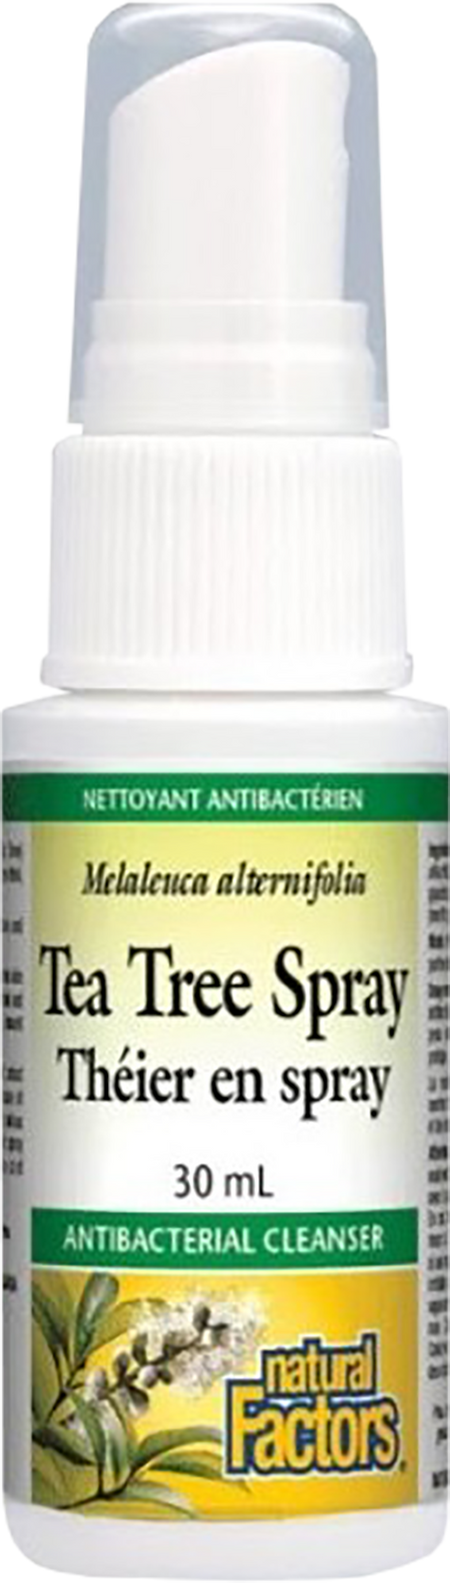 Tea Tree Spray 30ml - BadiZdrav.BG